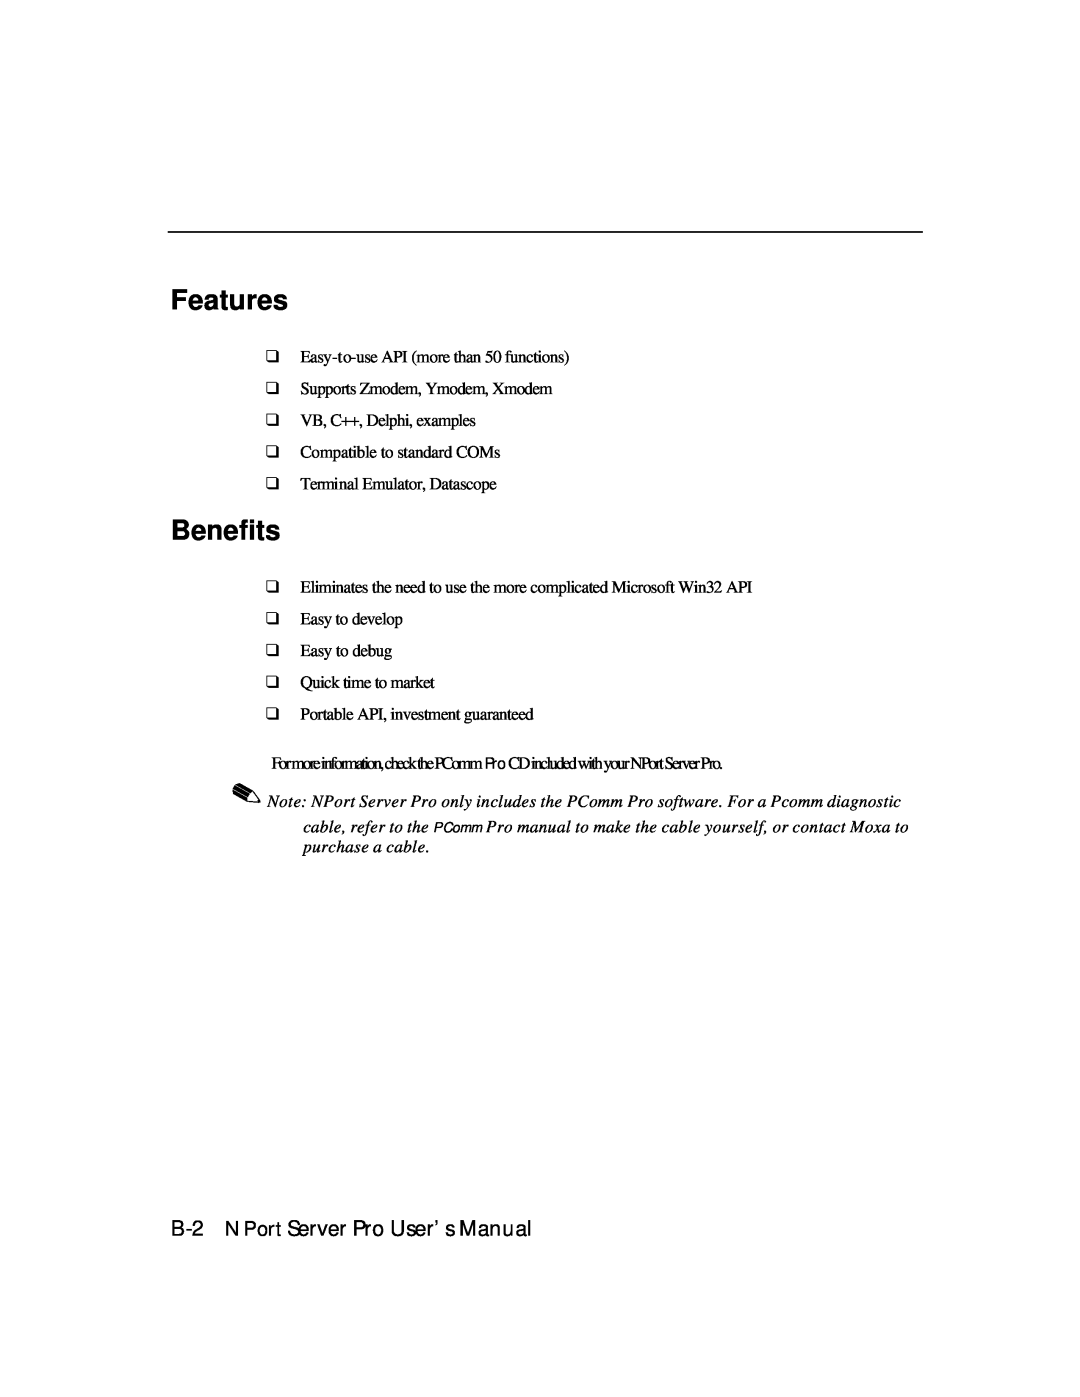 Moxa Technologies DE-303, DE-308 manual Benefits, B-2 NPort Server Pro User’s Manual, Features 